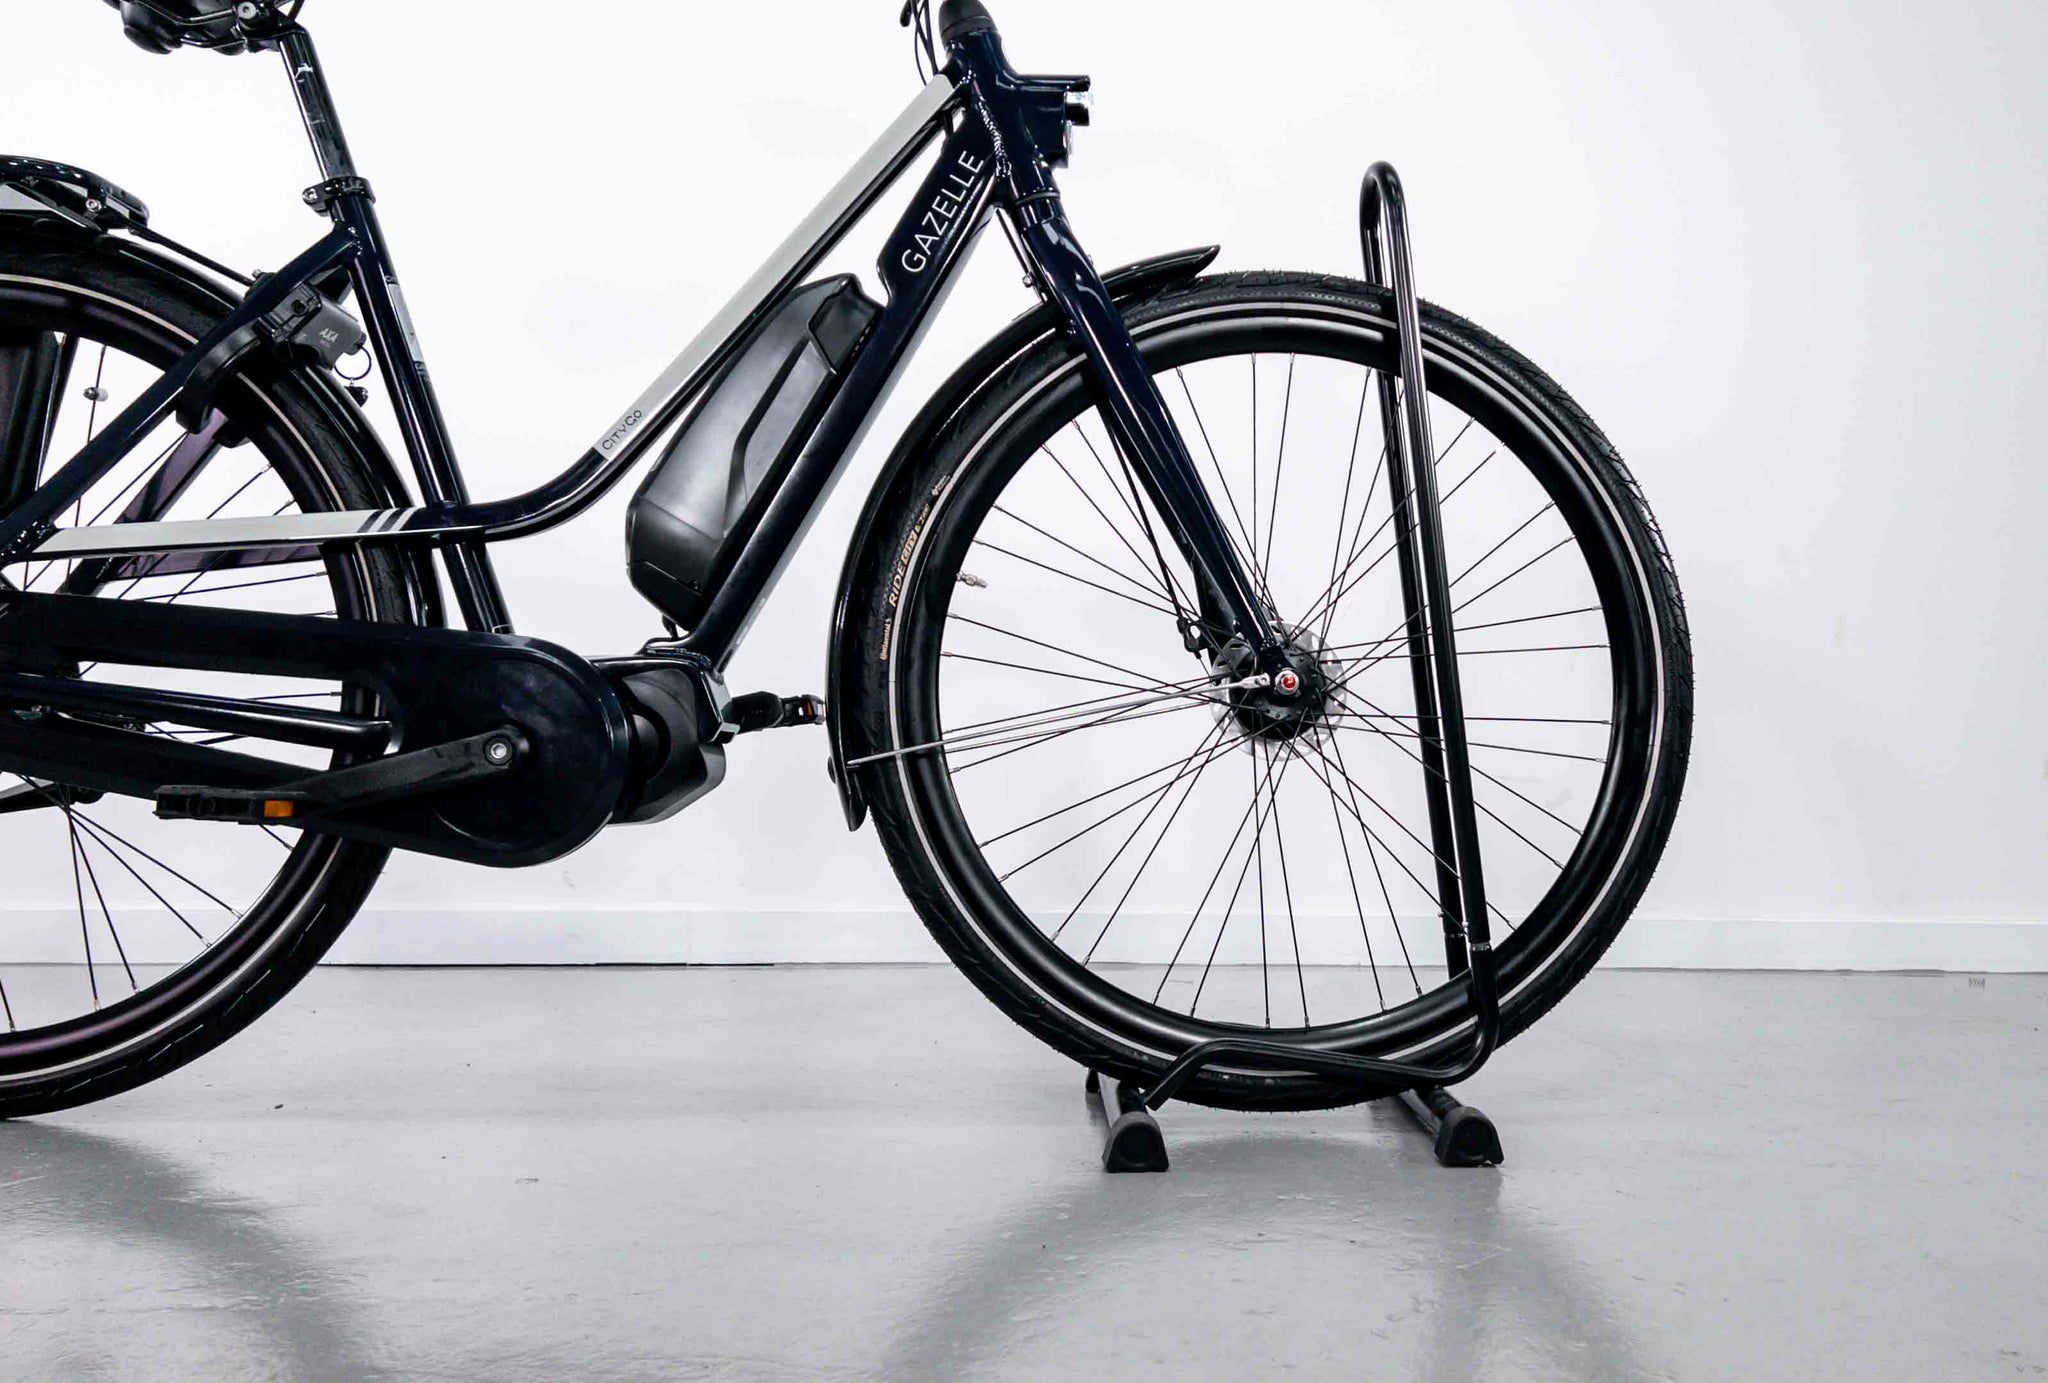 Gazelle CityGo C7 Step Through Electric Hybrid Bike 2021 - Small